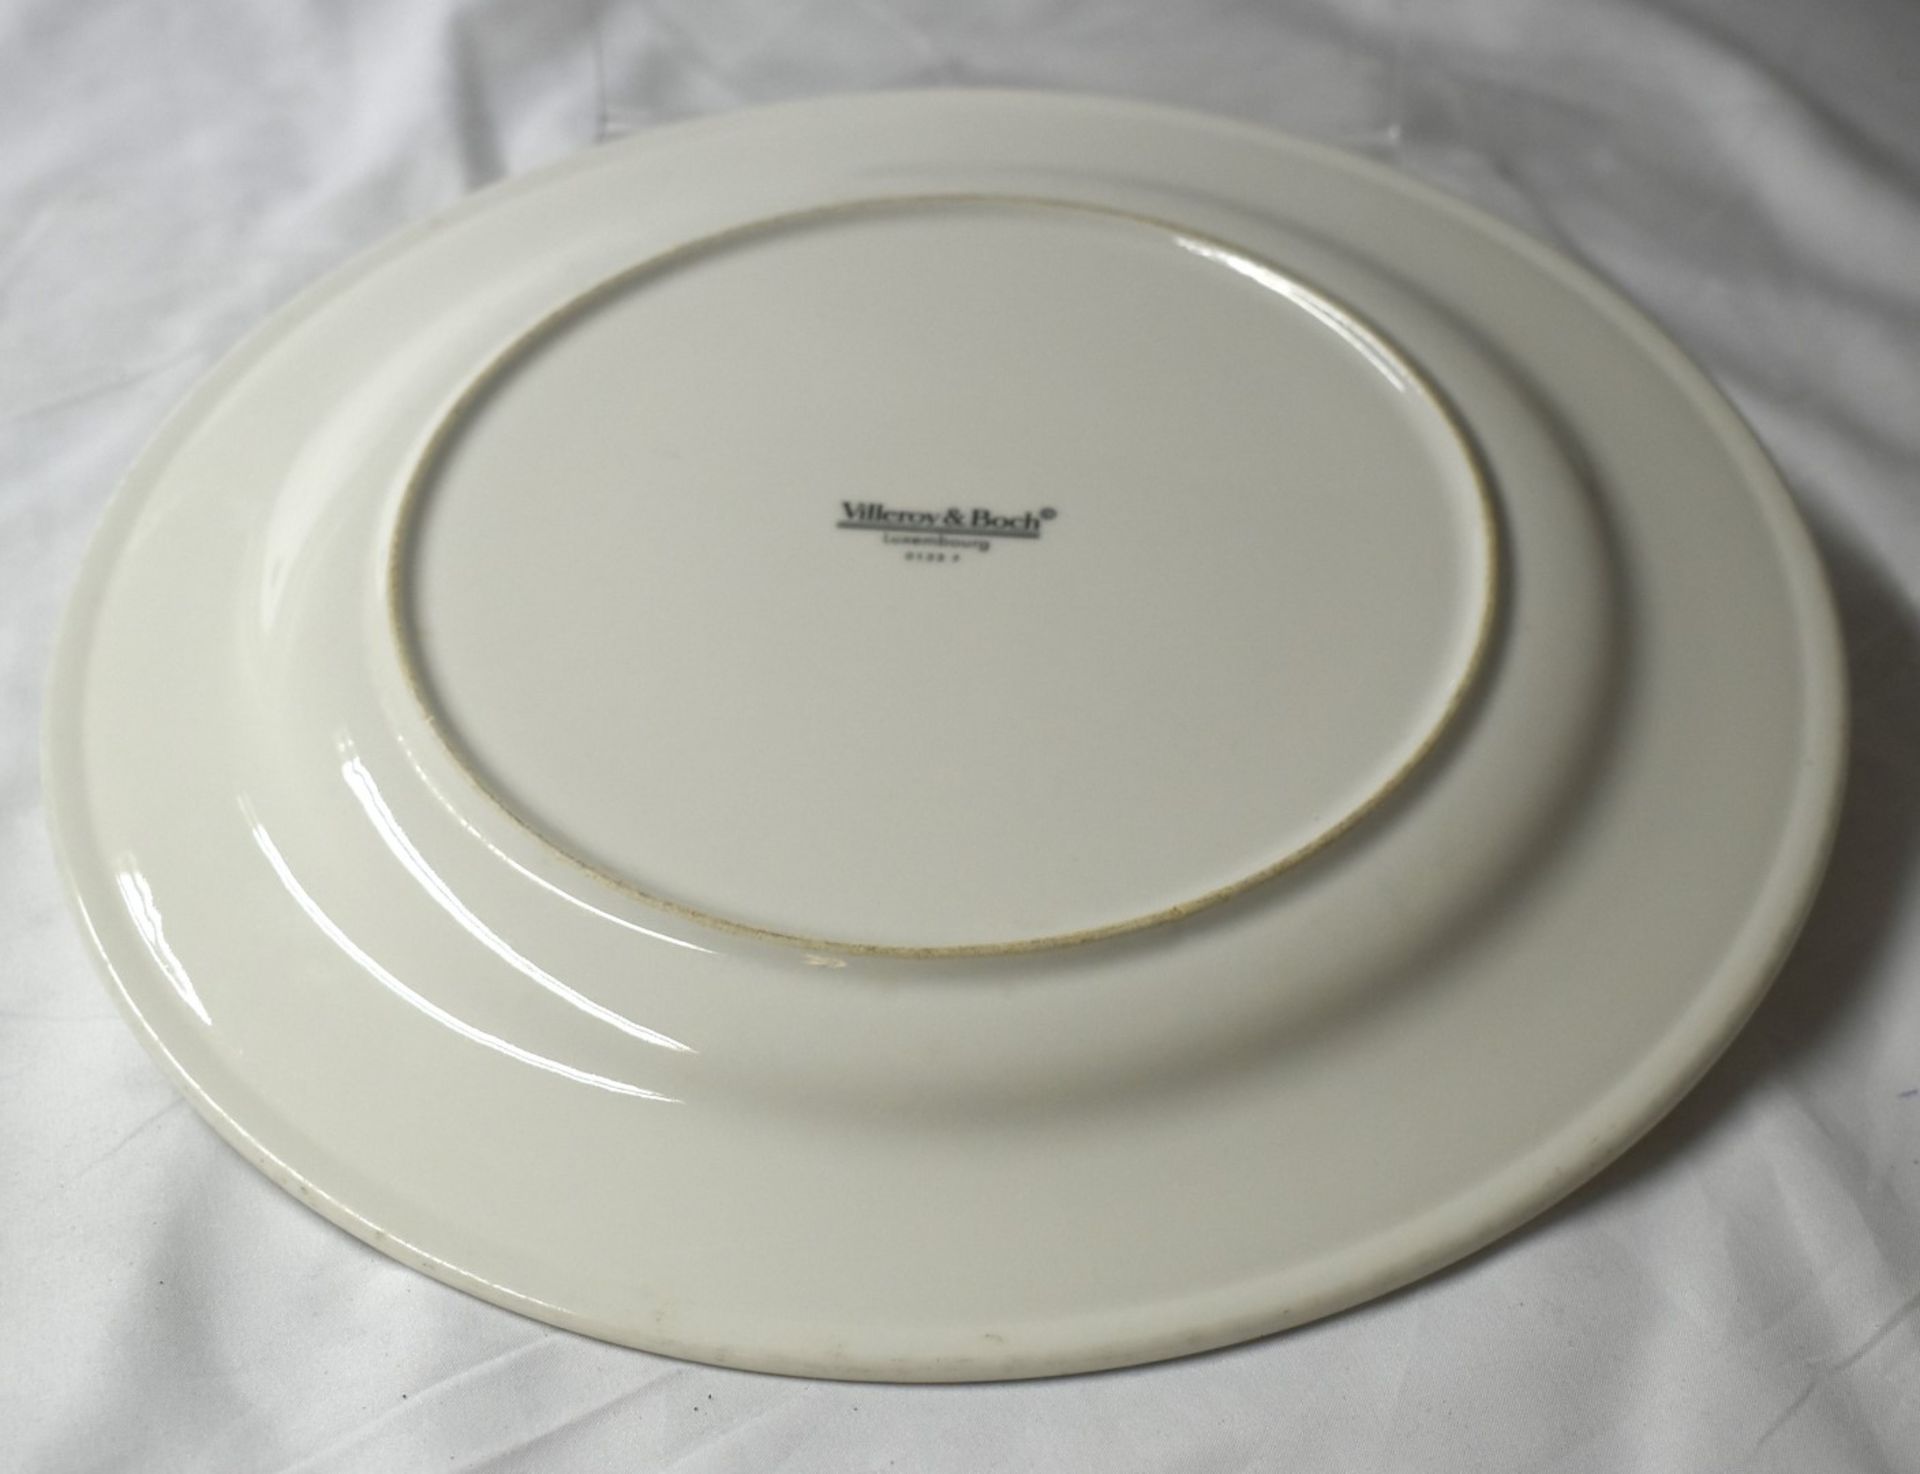 6 x Villeroy & Boch Contemporary Porcelain Flat Dinner Plates - 31.5 cms - CL011 - Ref: PX284 - - Image 3 of 7